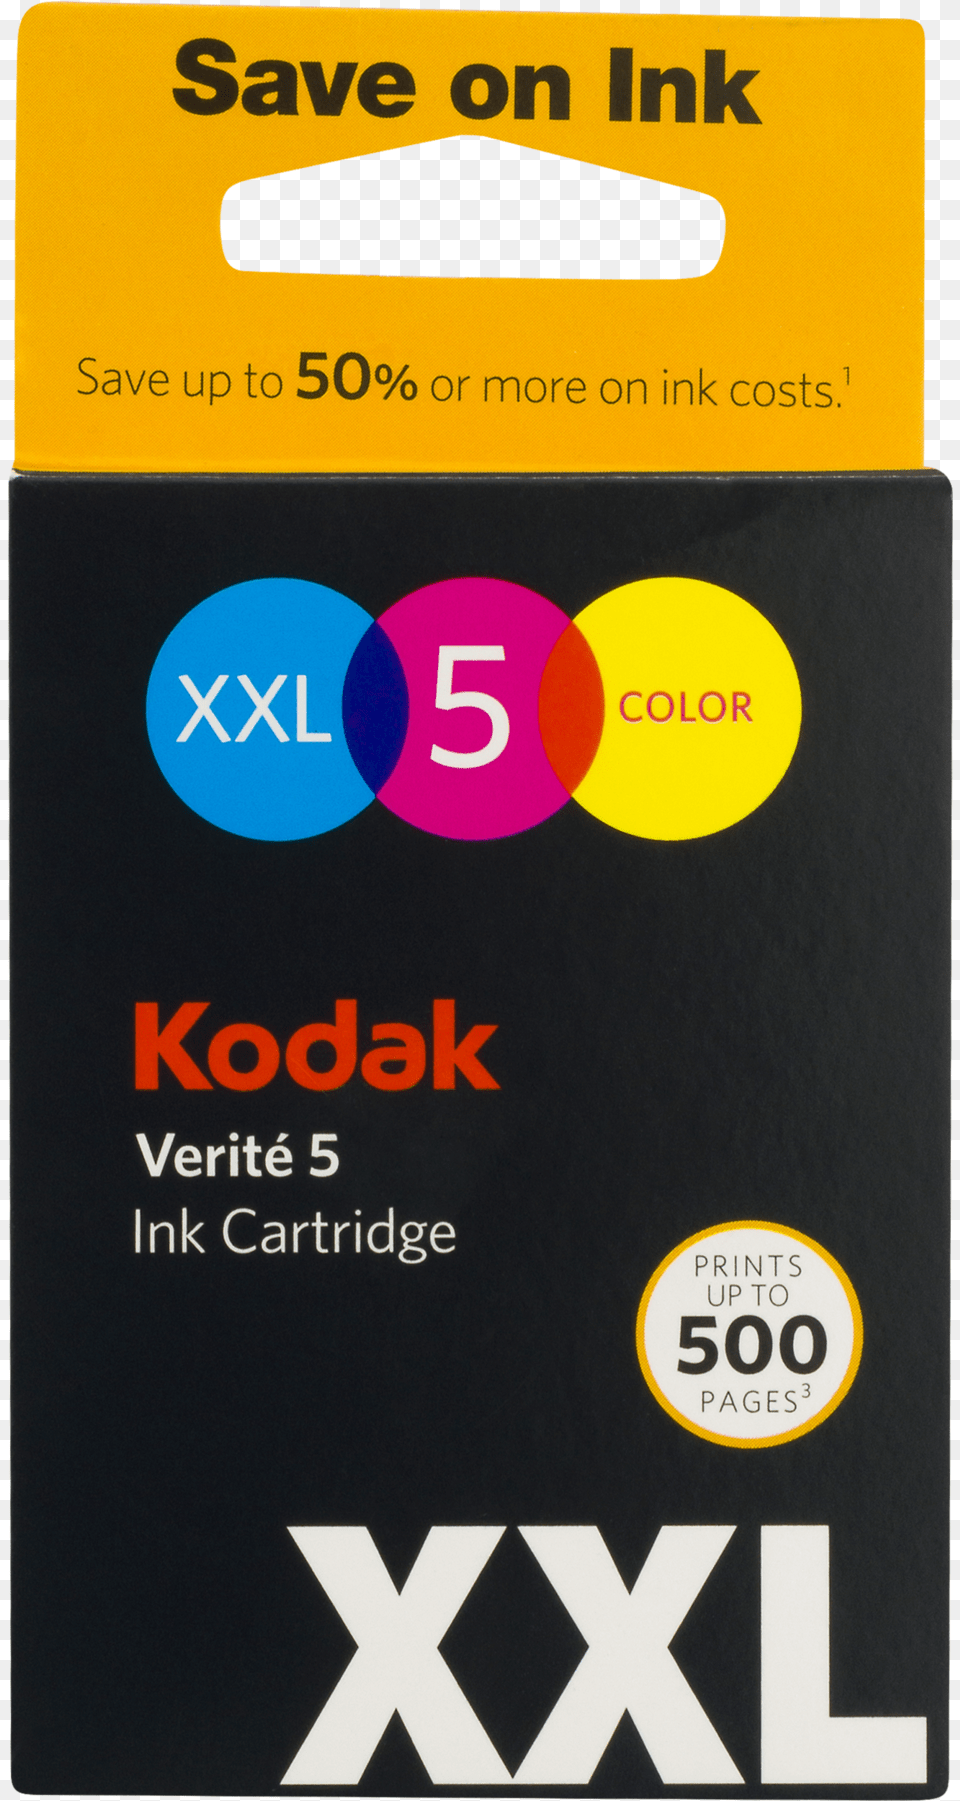 Kodak Verite 5 Xl Black Ink Cartridge Not Applicable, Text Png